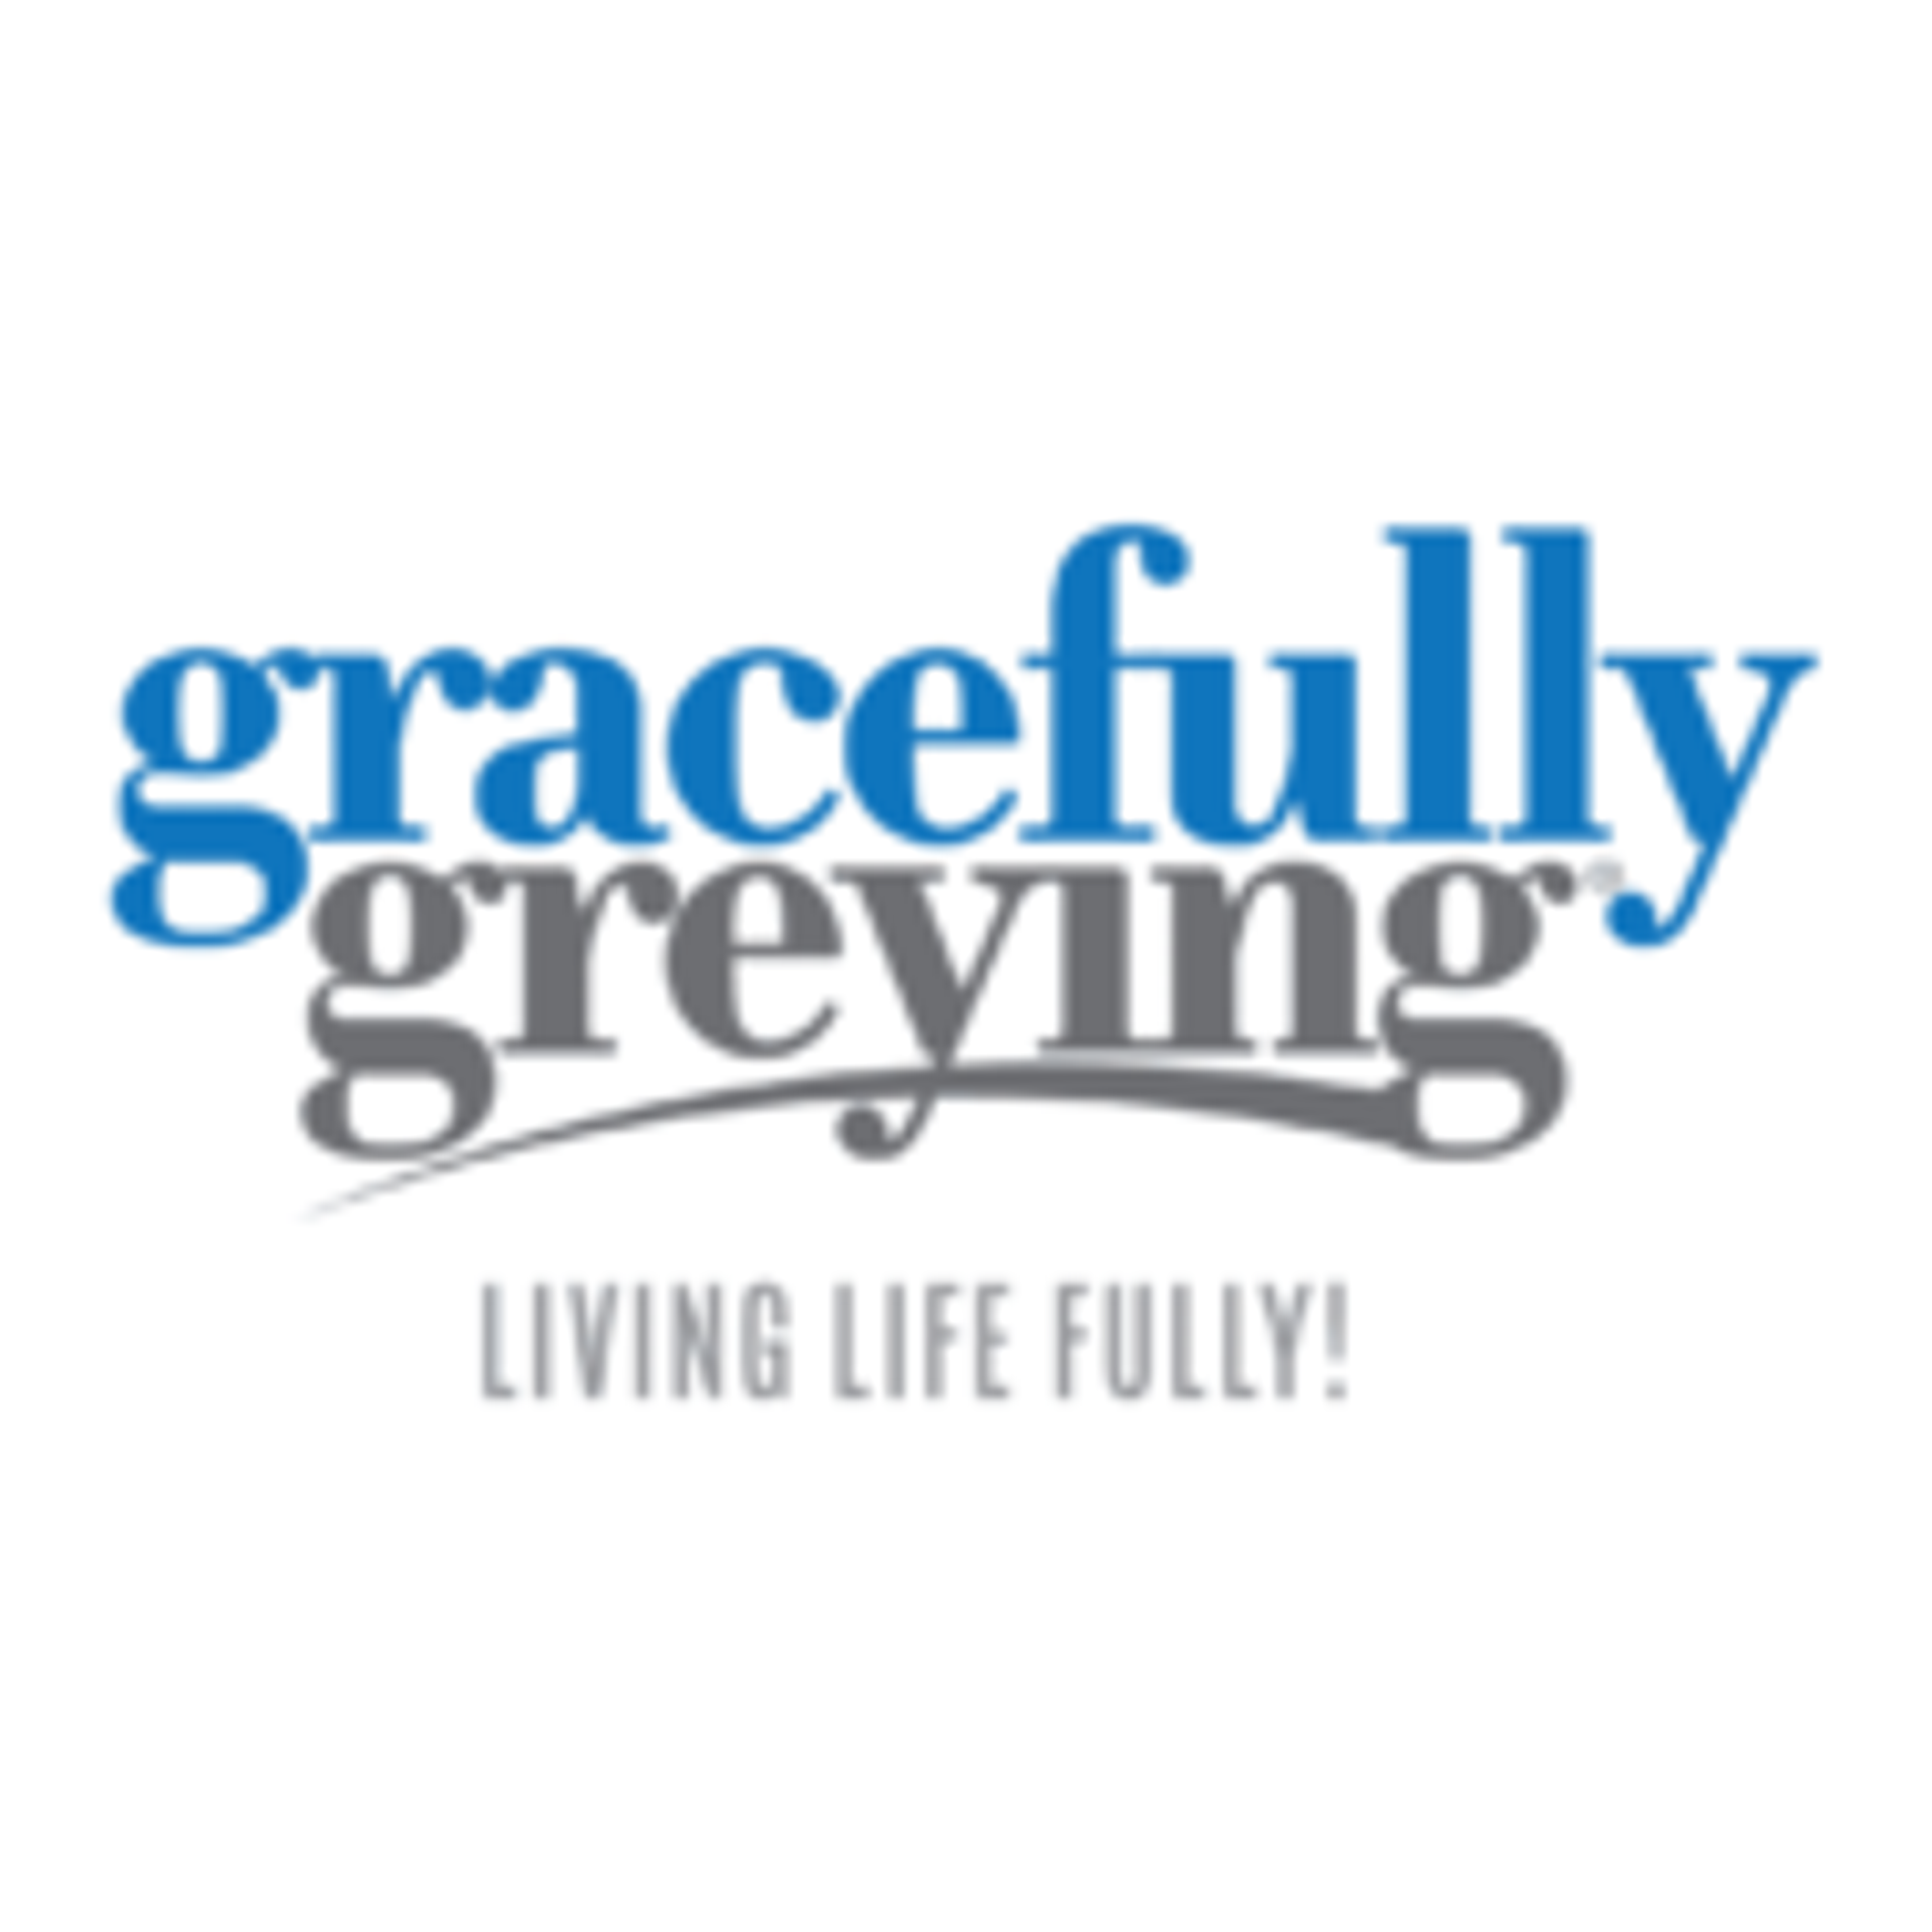 Gracefully Greying